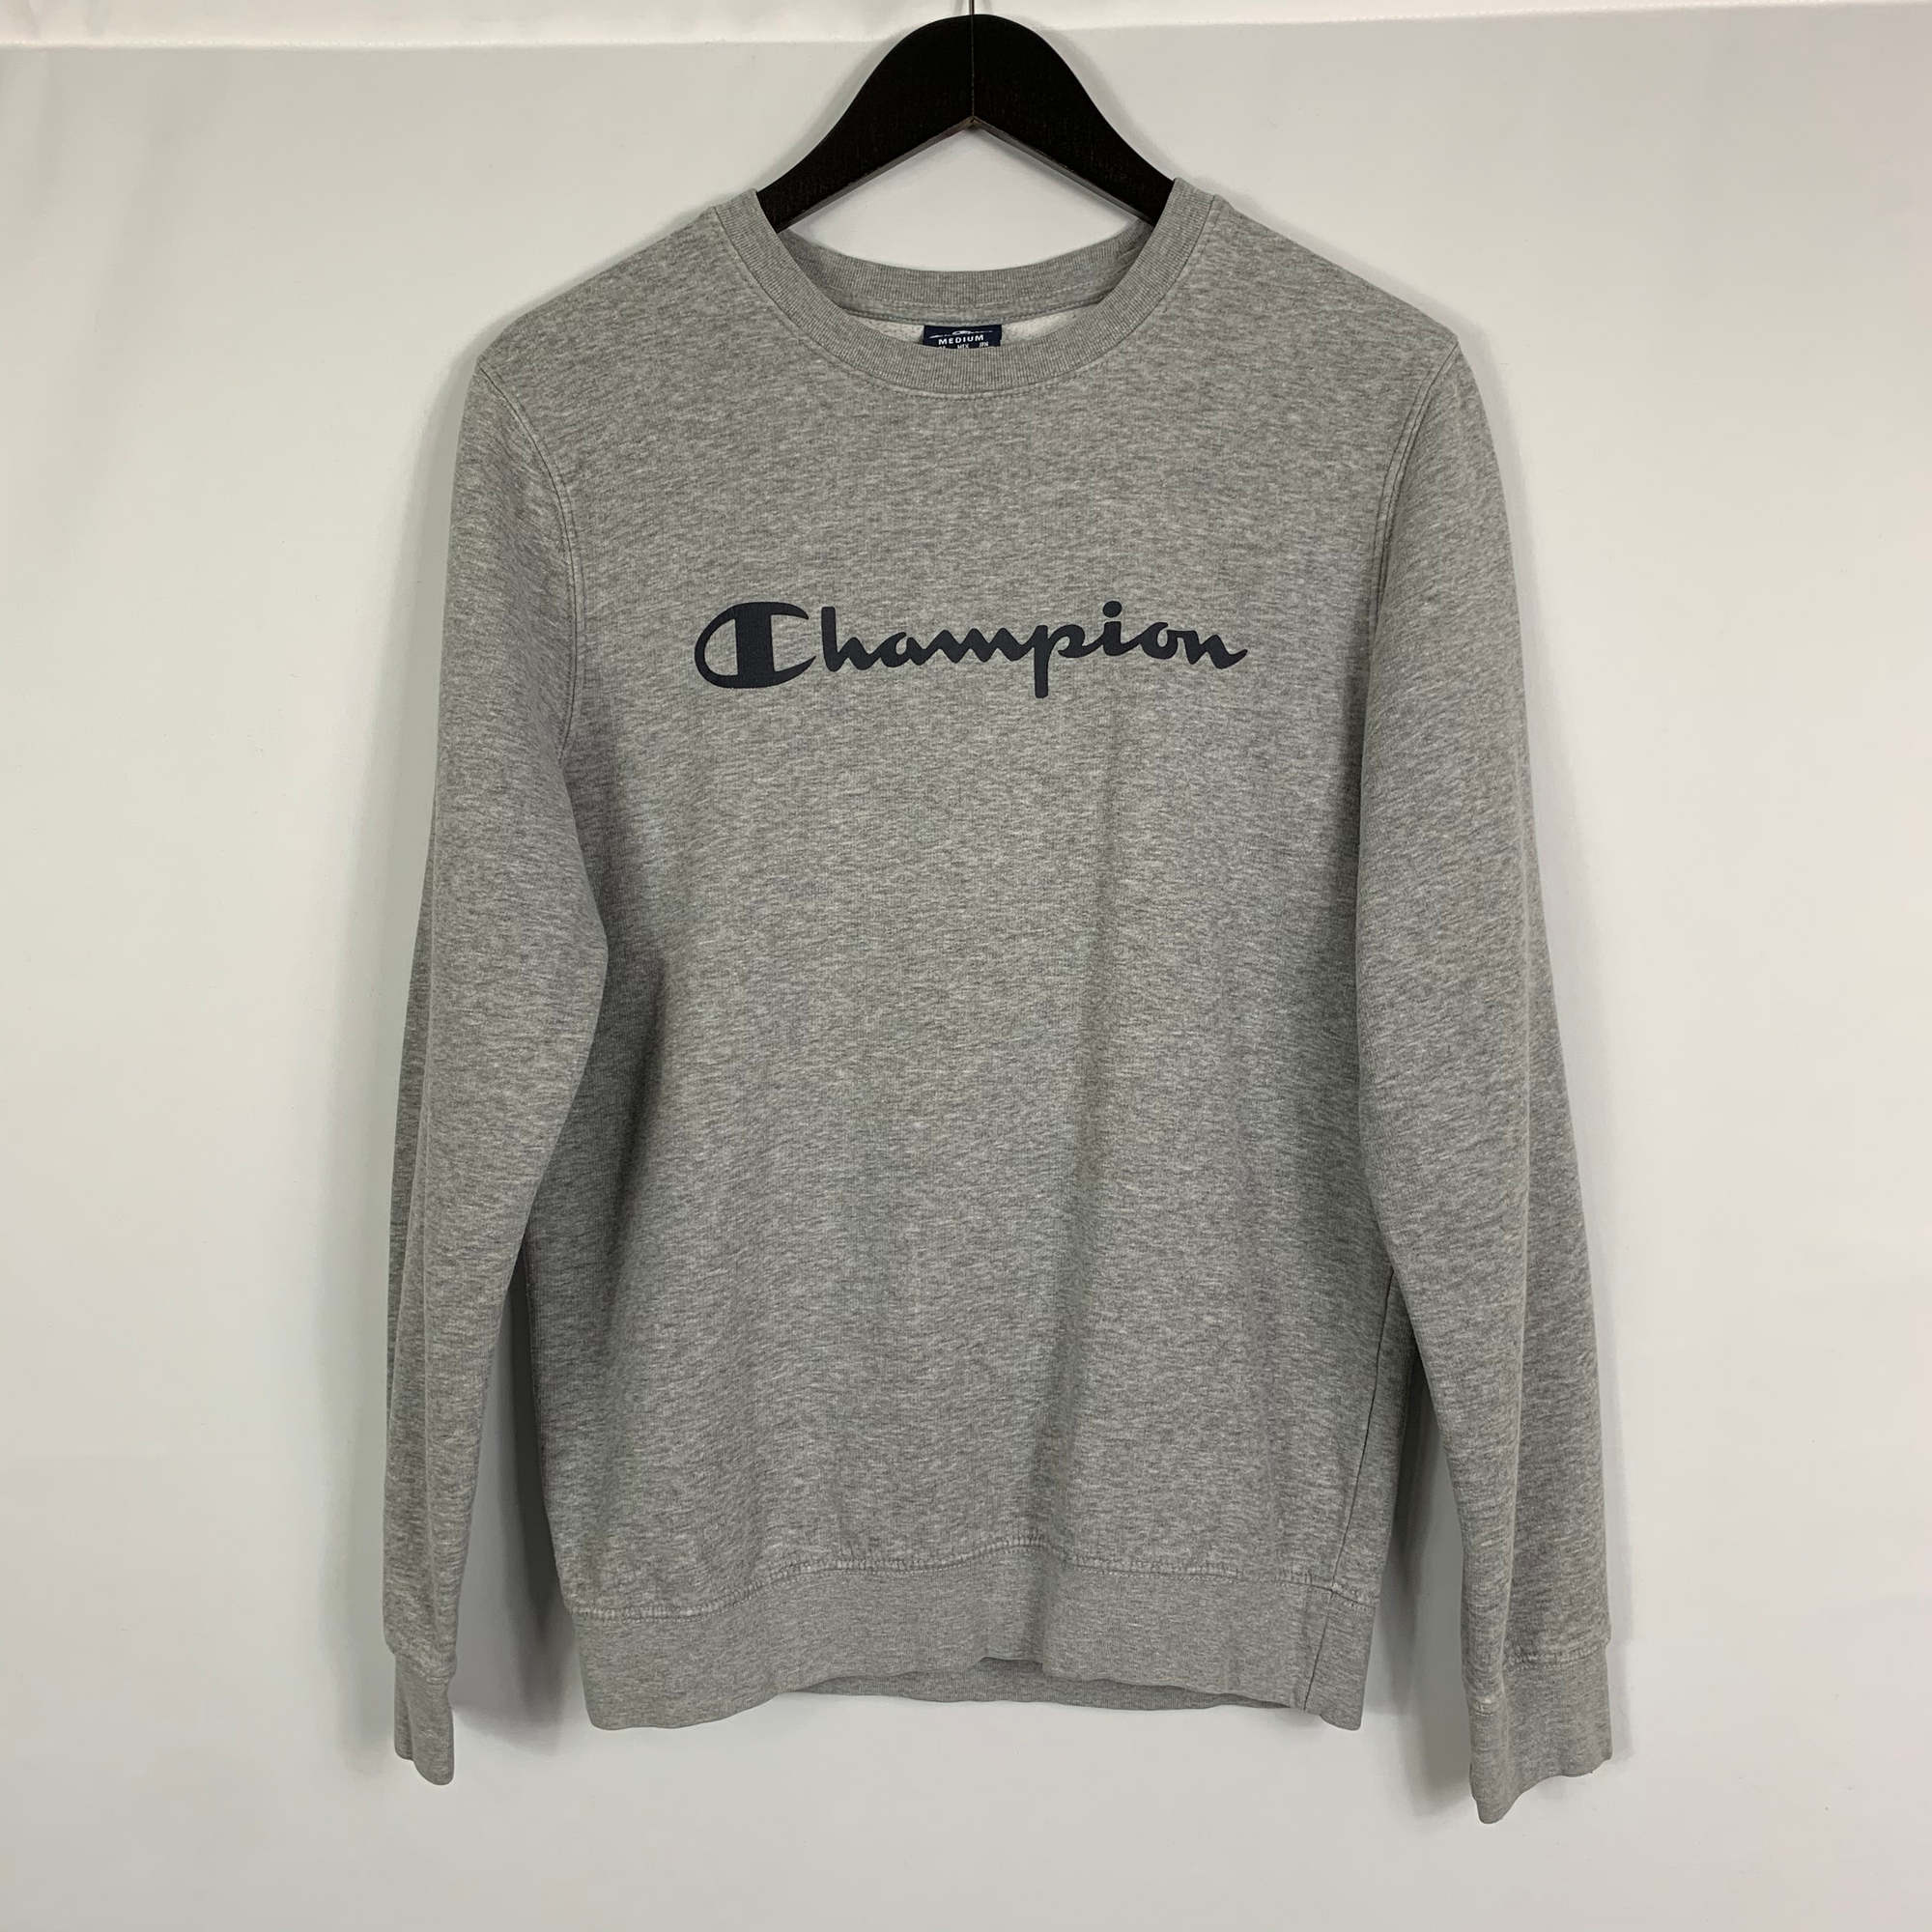 Vintage Champion Spellout Sweatshirt - Men's Medium/ Women's Large